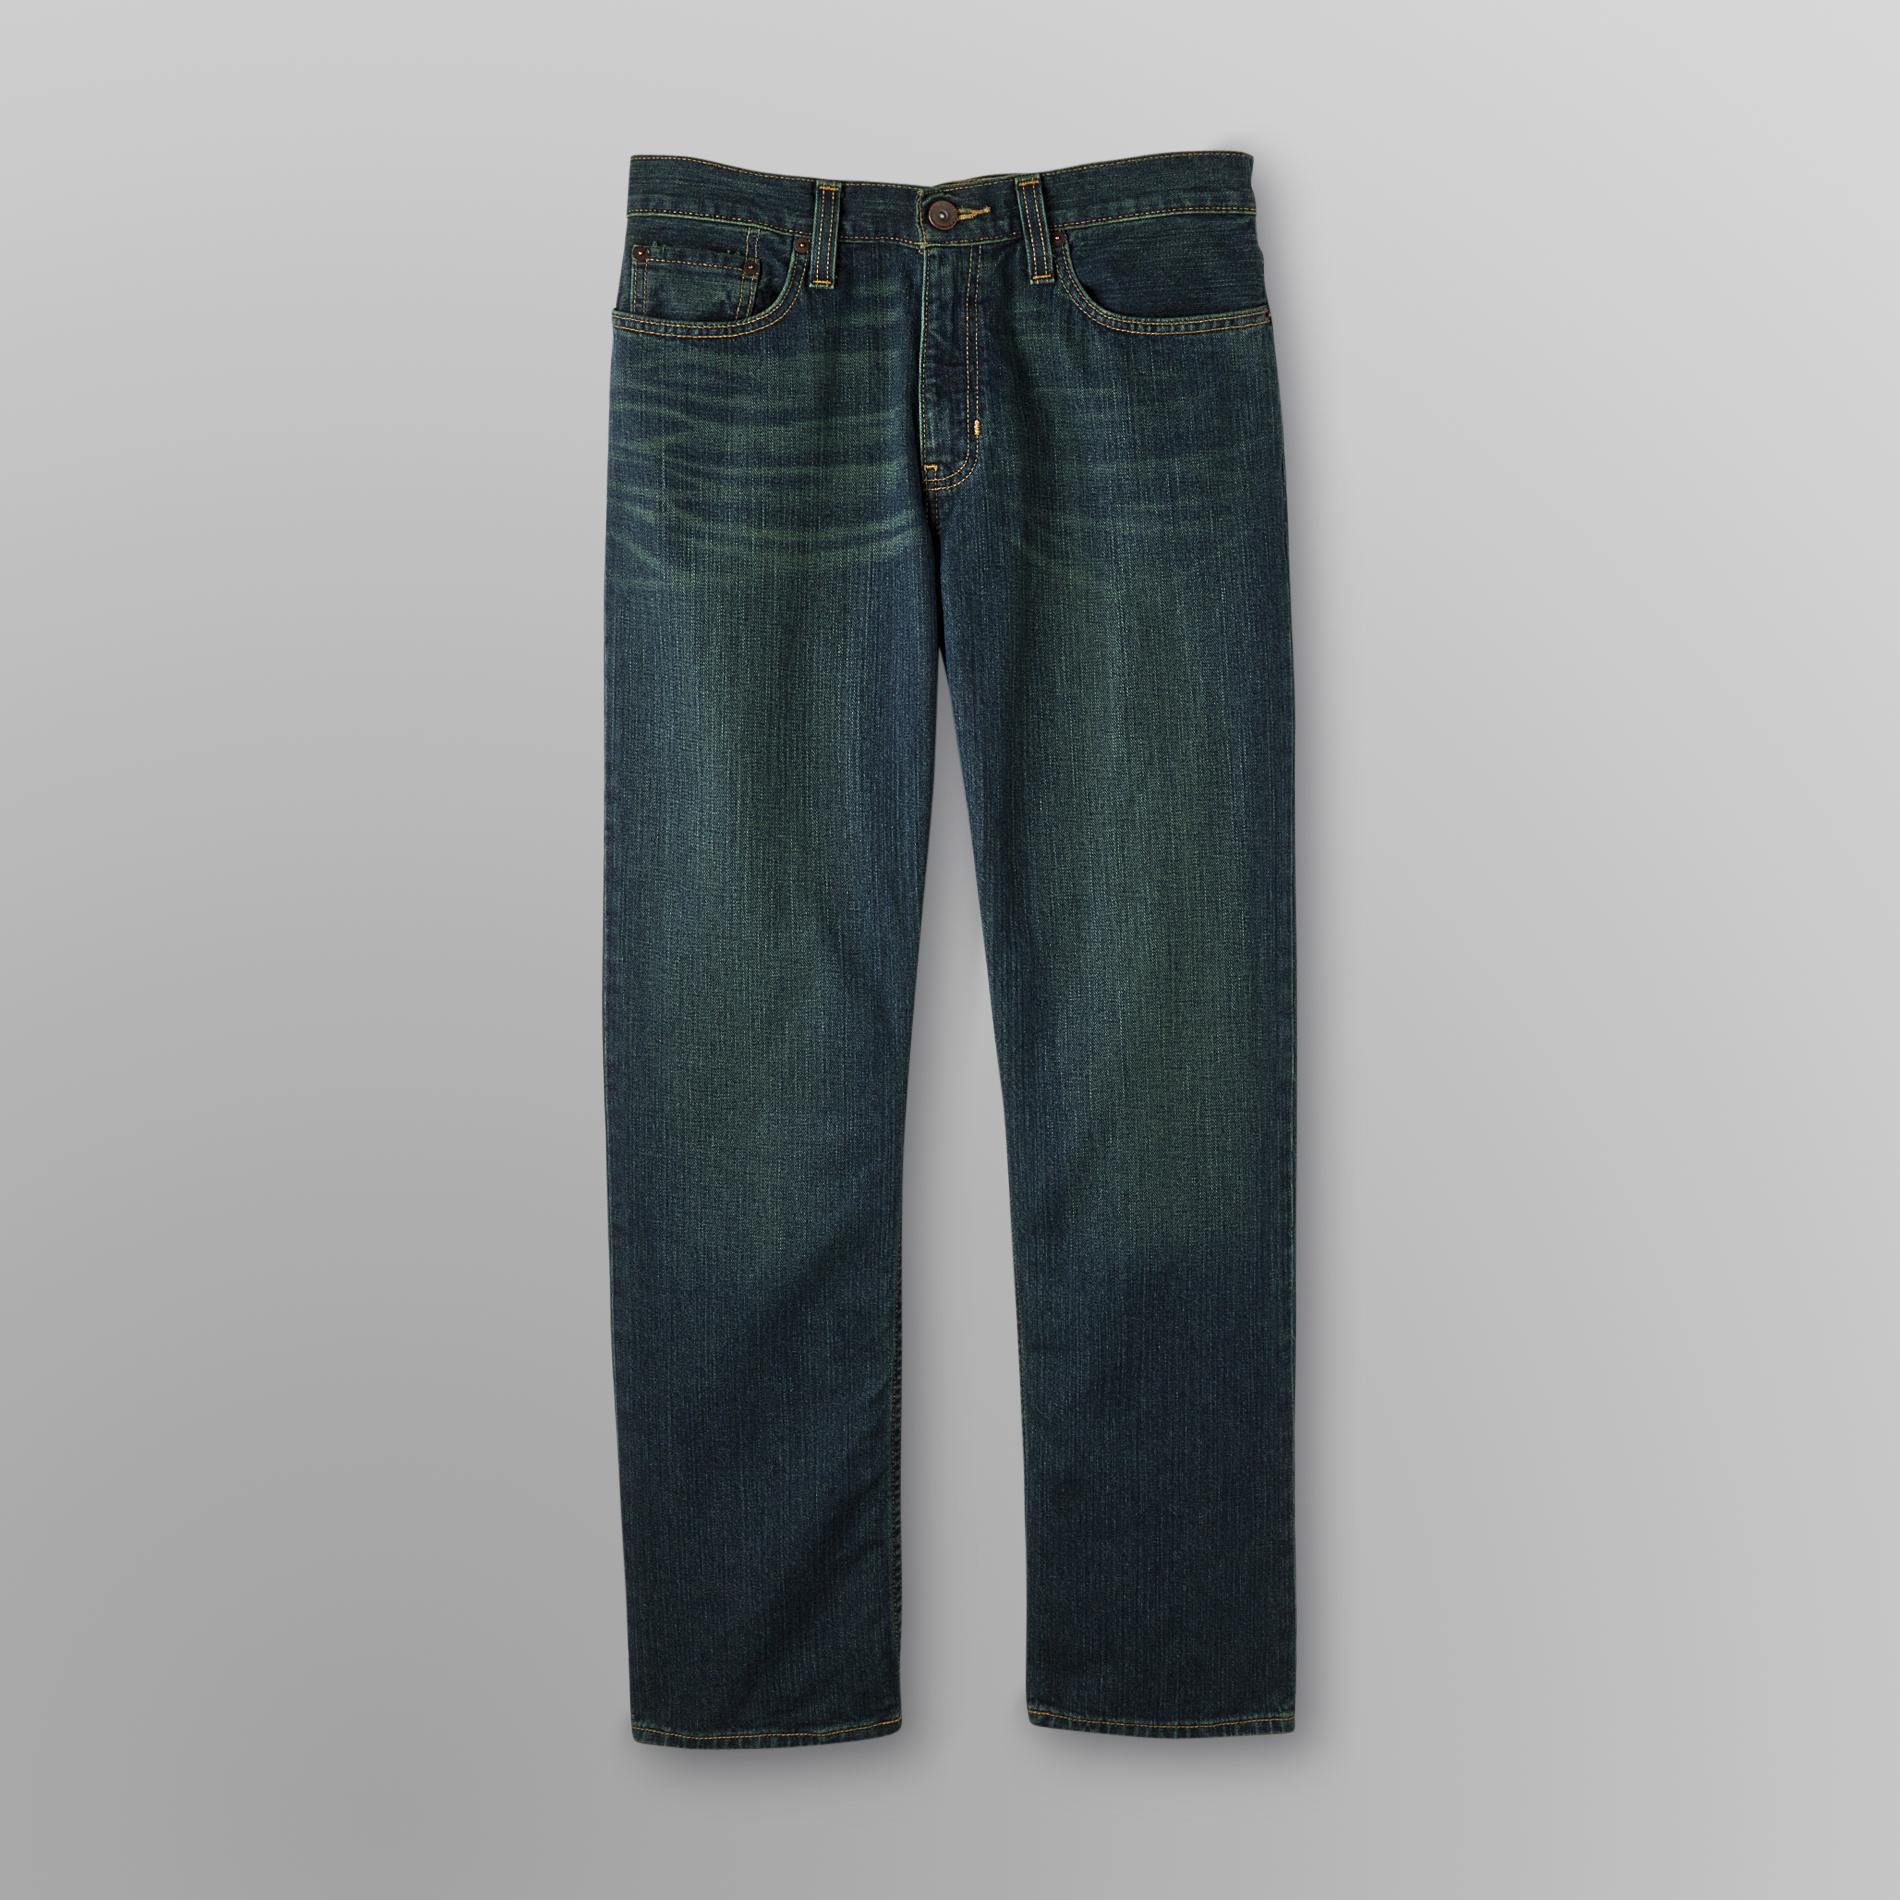 Roebuck & Co. Young Men's Regular Fit Jeans